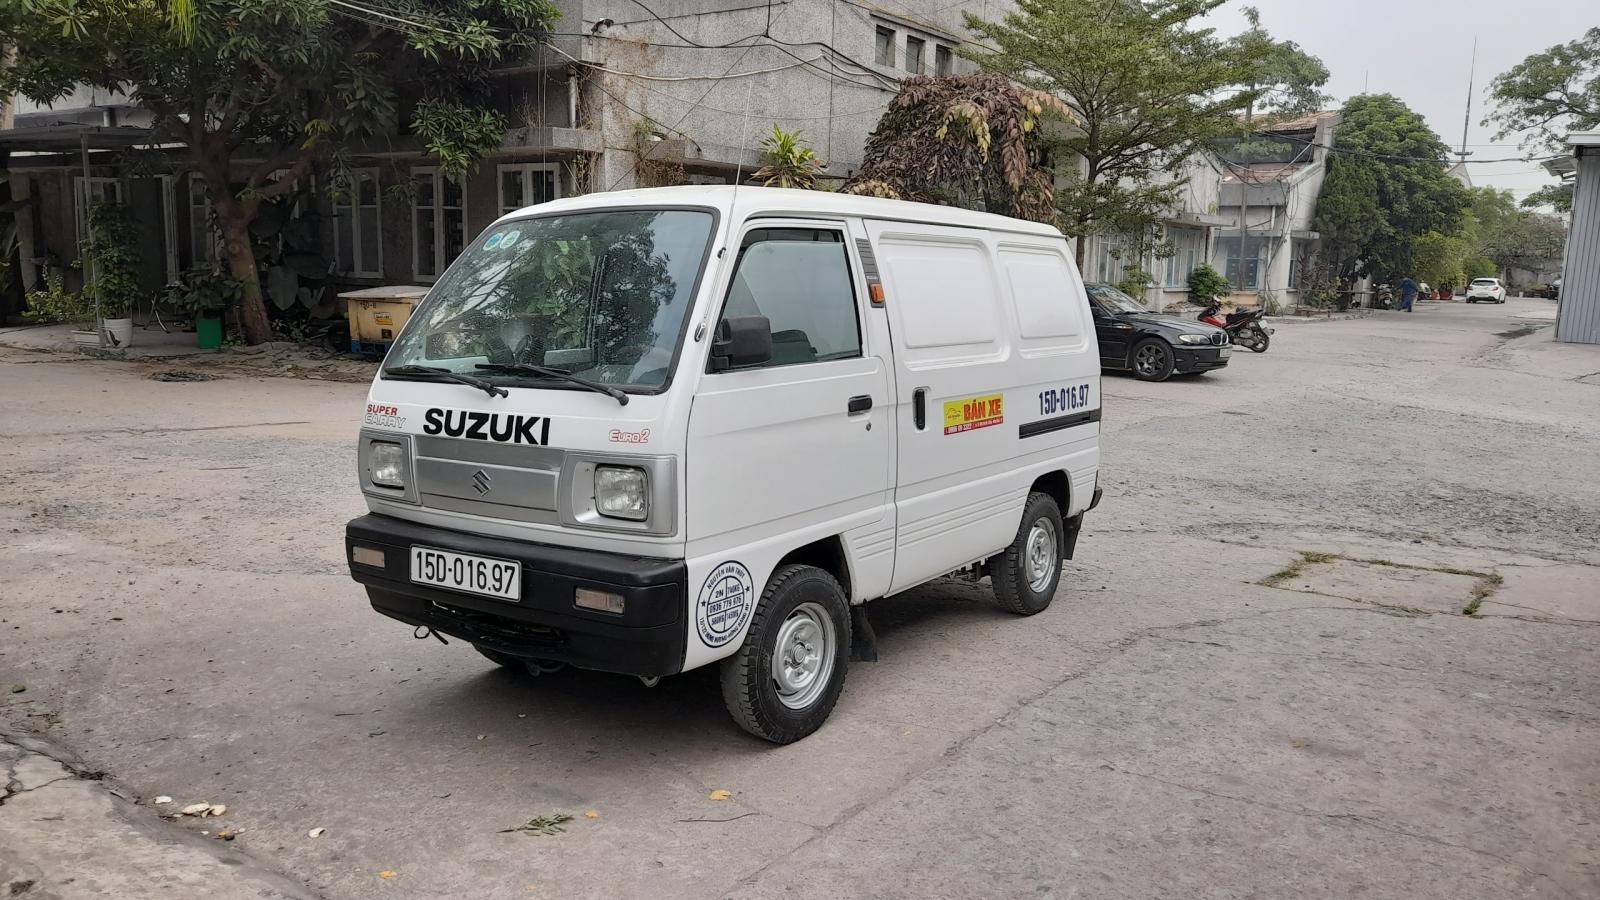 Suzuki Super Carry Van 2015 - Ban Suzuki tai van doi 2015 bks 15D-016.97 tai Hai Phong lien he 089.66.333.22 